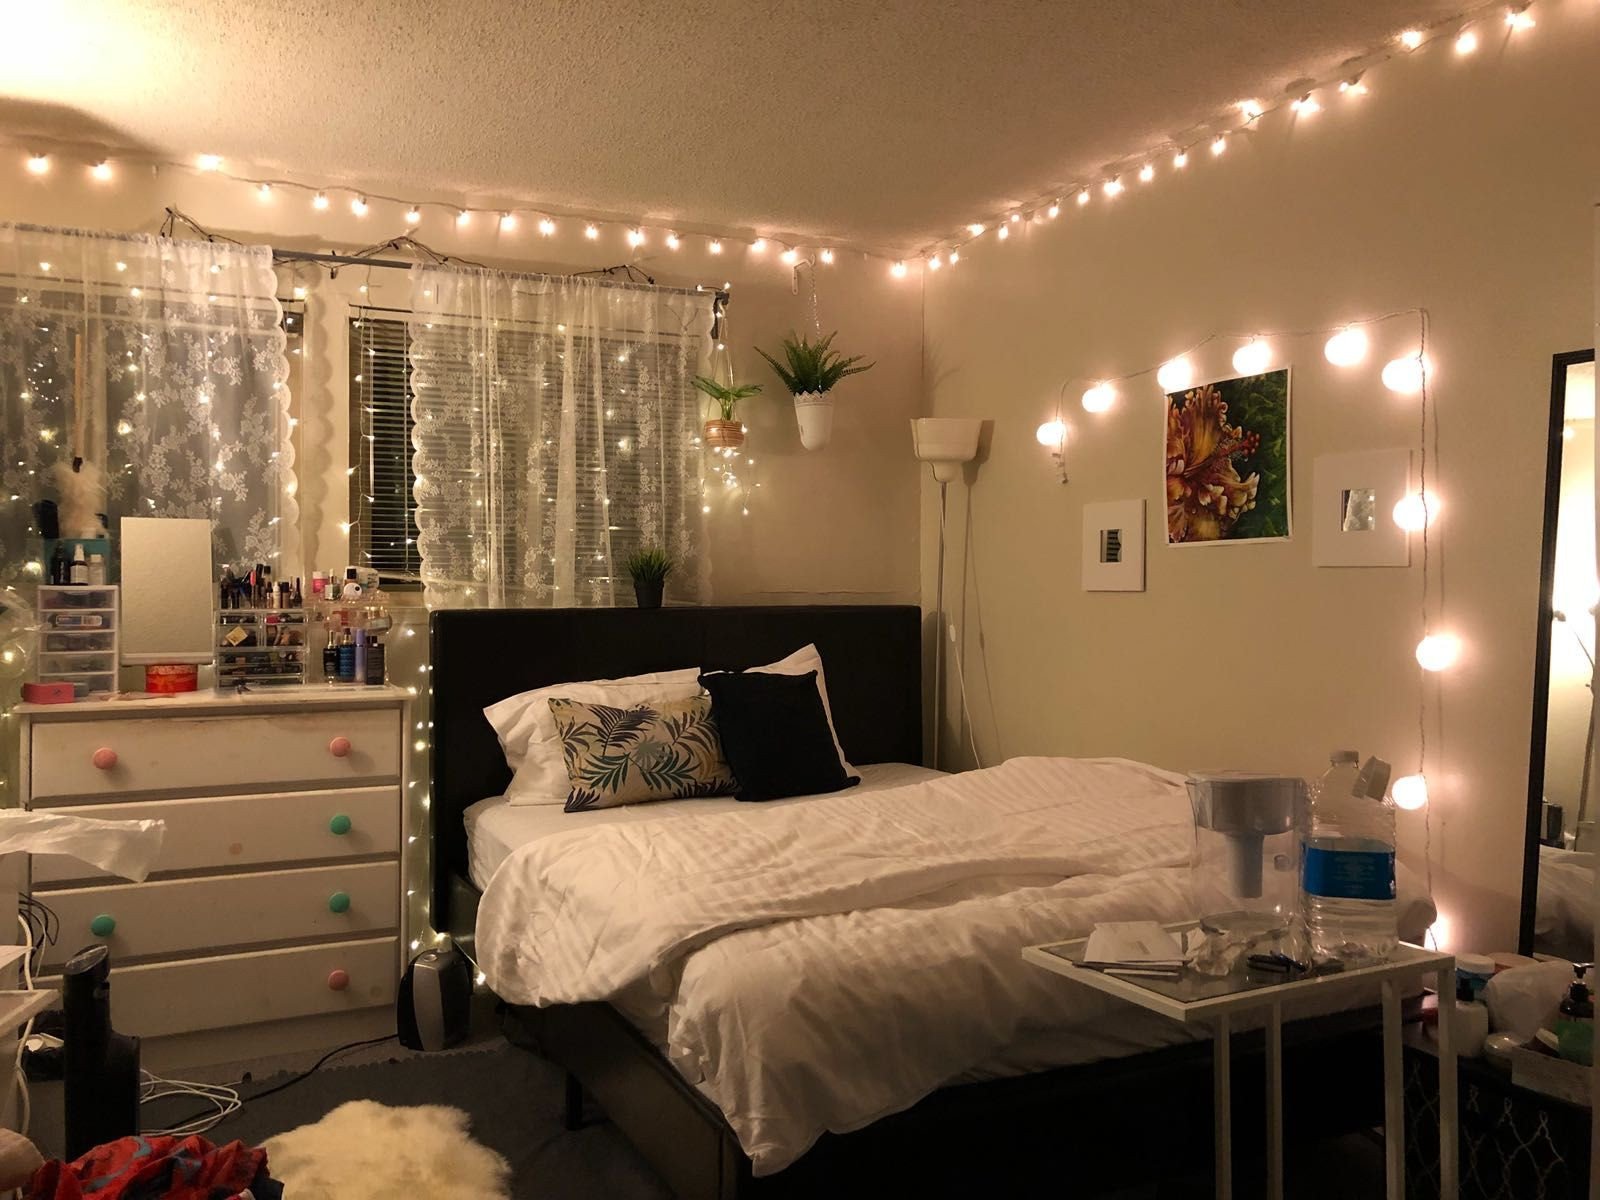 Cute Light for Bedroom Unique Cute Room Light Cute Roomdecor Room Teengirl